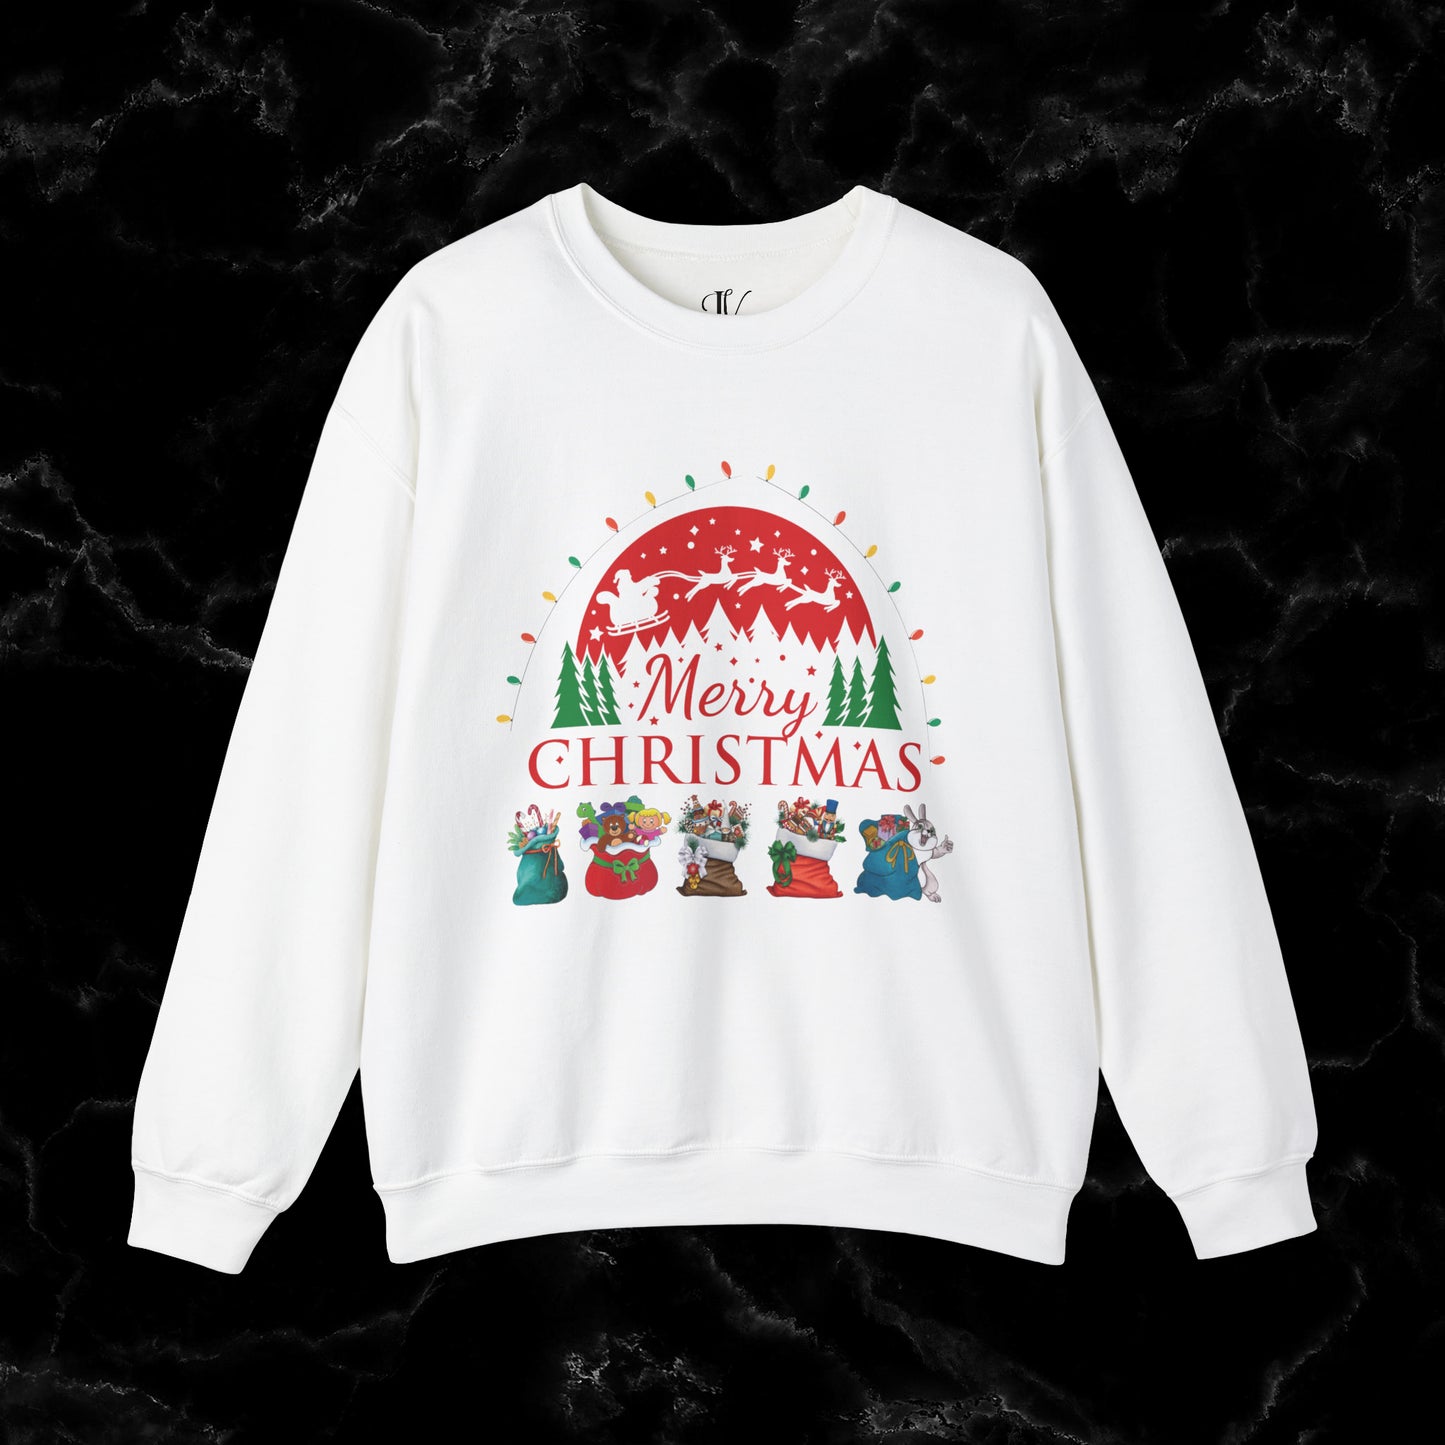 Merry Christmas Sweatshirt - Christmas Shirt with Santa and Festive Theme Sweatshirt S White 